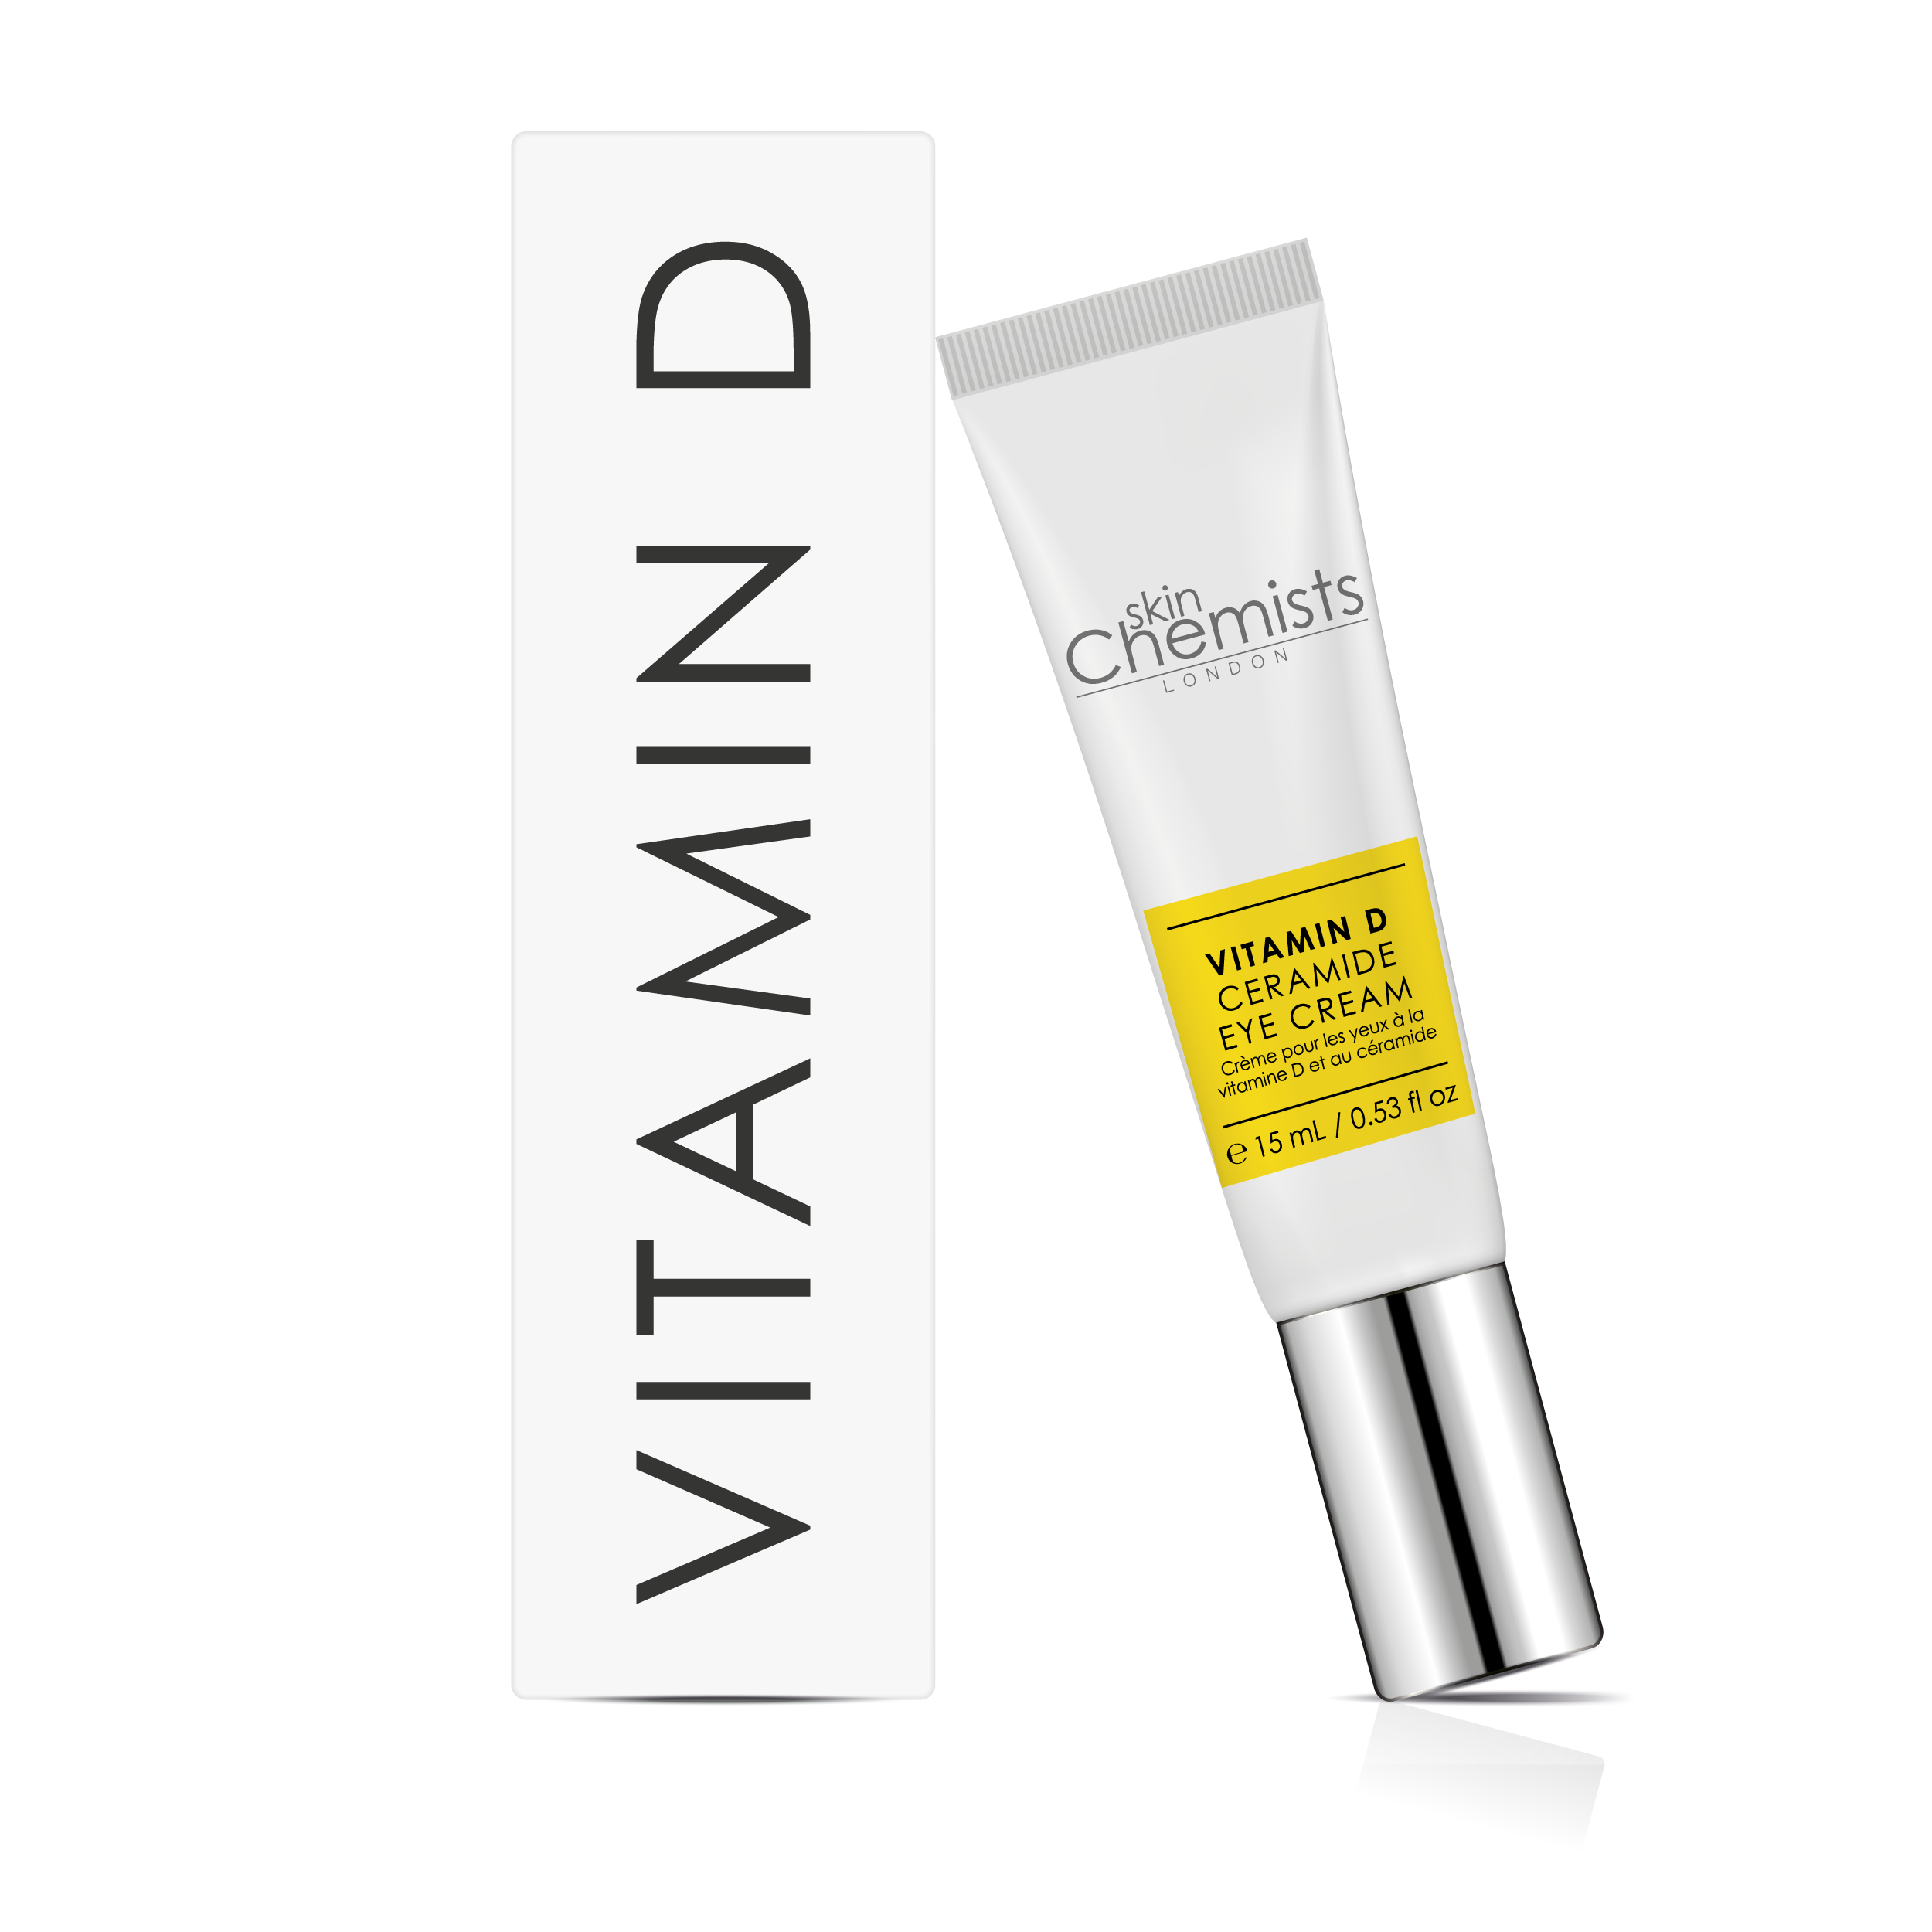 Vitamin D Ceramide Eye Cream 15ml - skinChemists